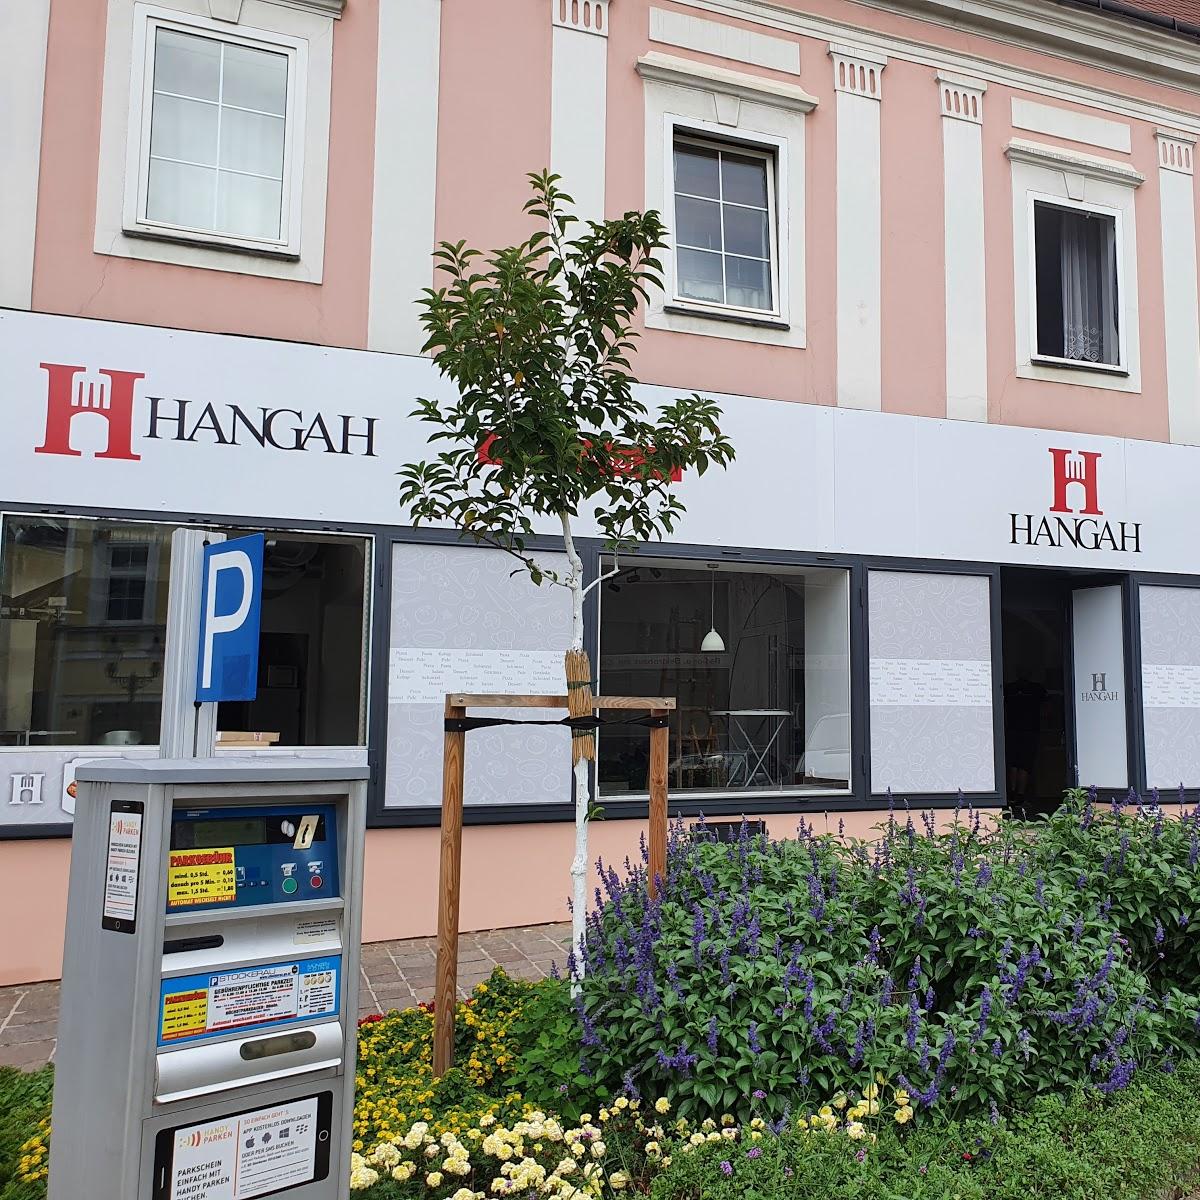 Restaurant "Hangah" in Stockerau